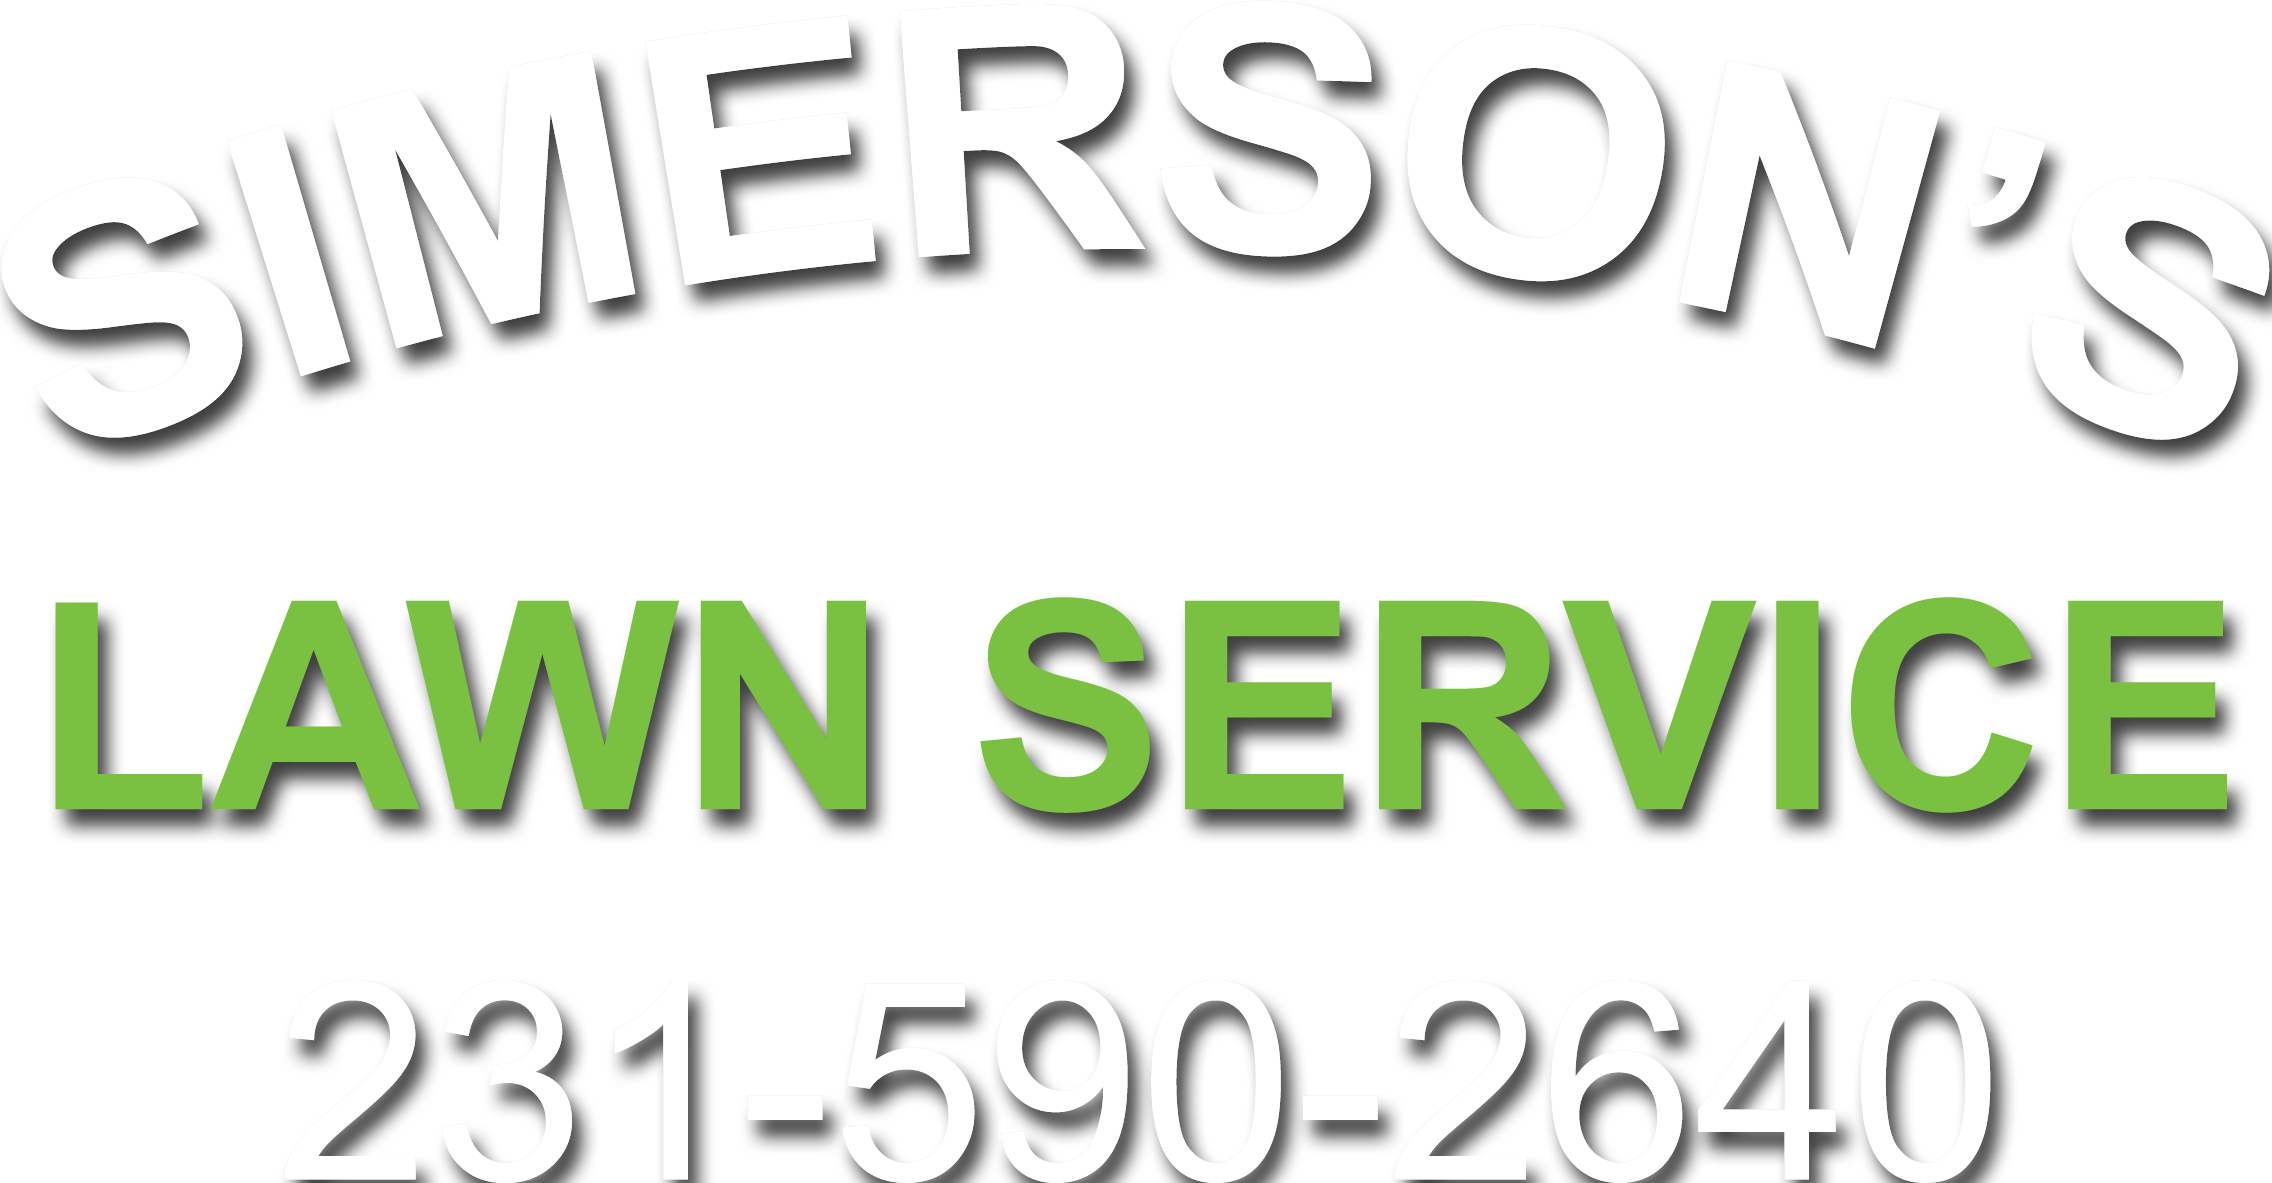 simerson's lawn service